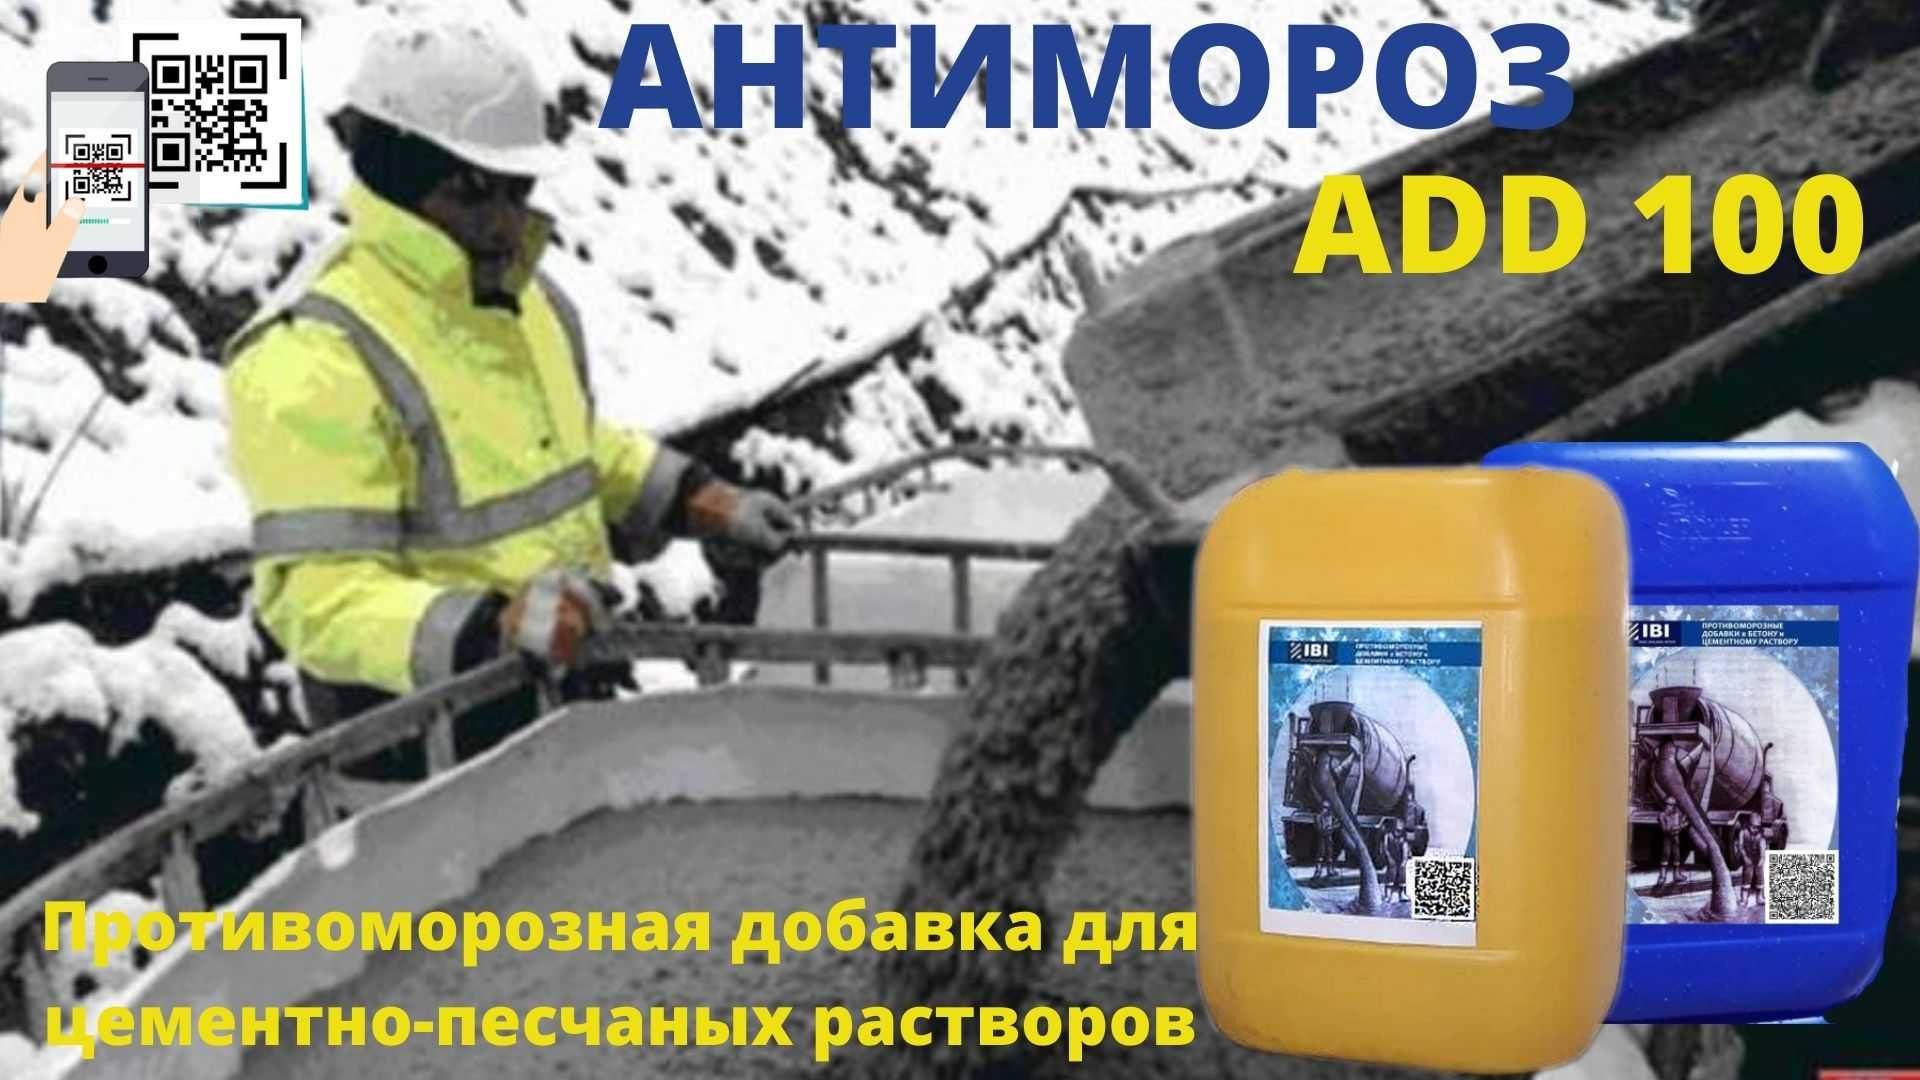 Антимороз antimаroz для бетона и цементному раствору ADD 100